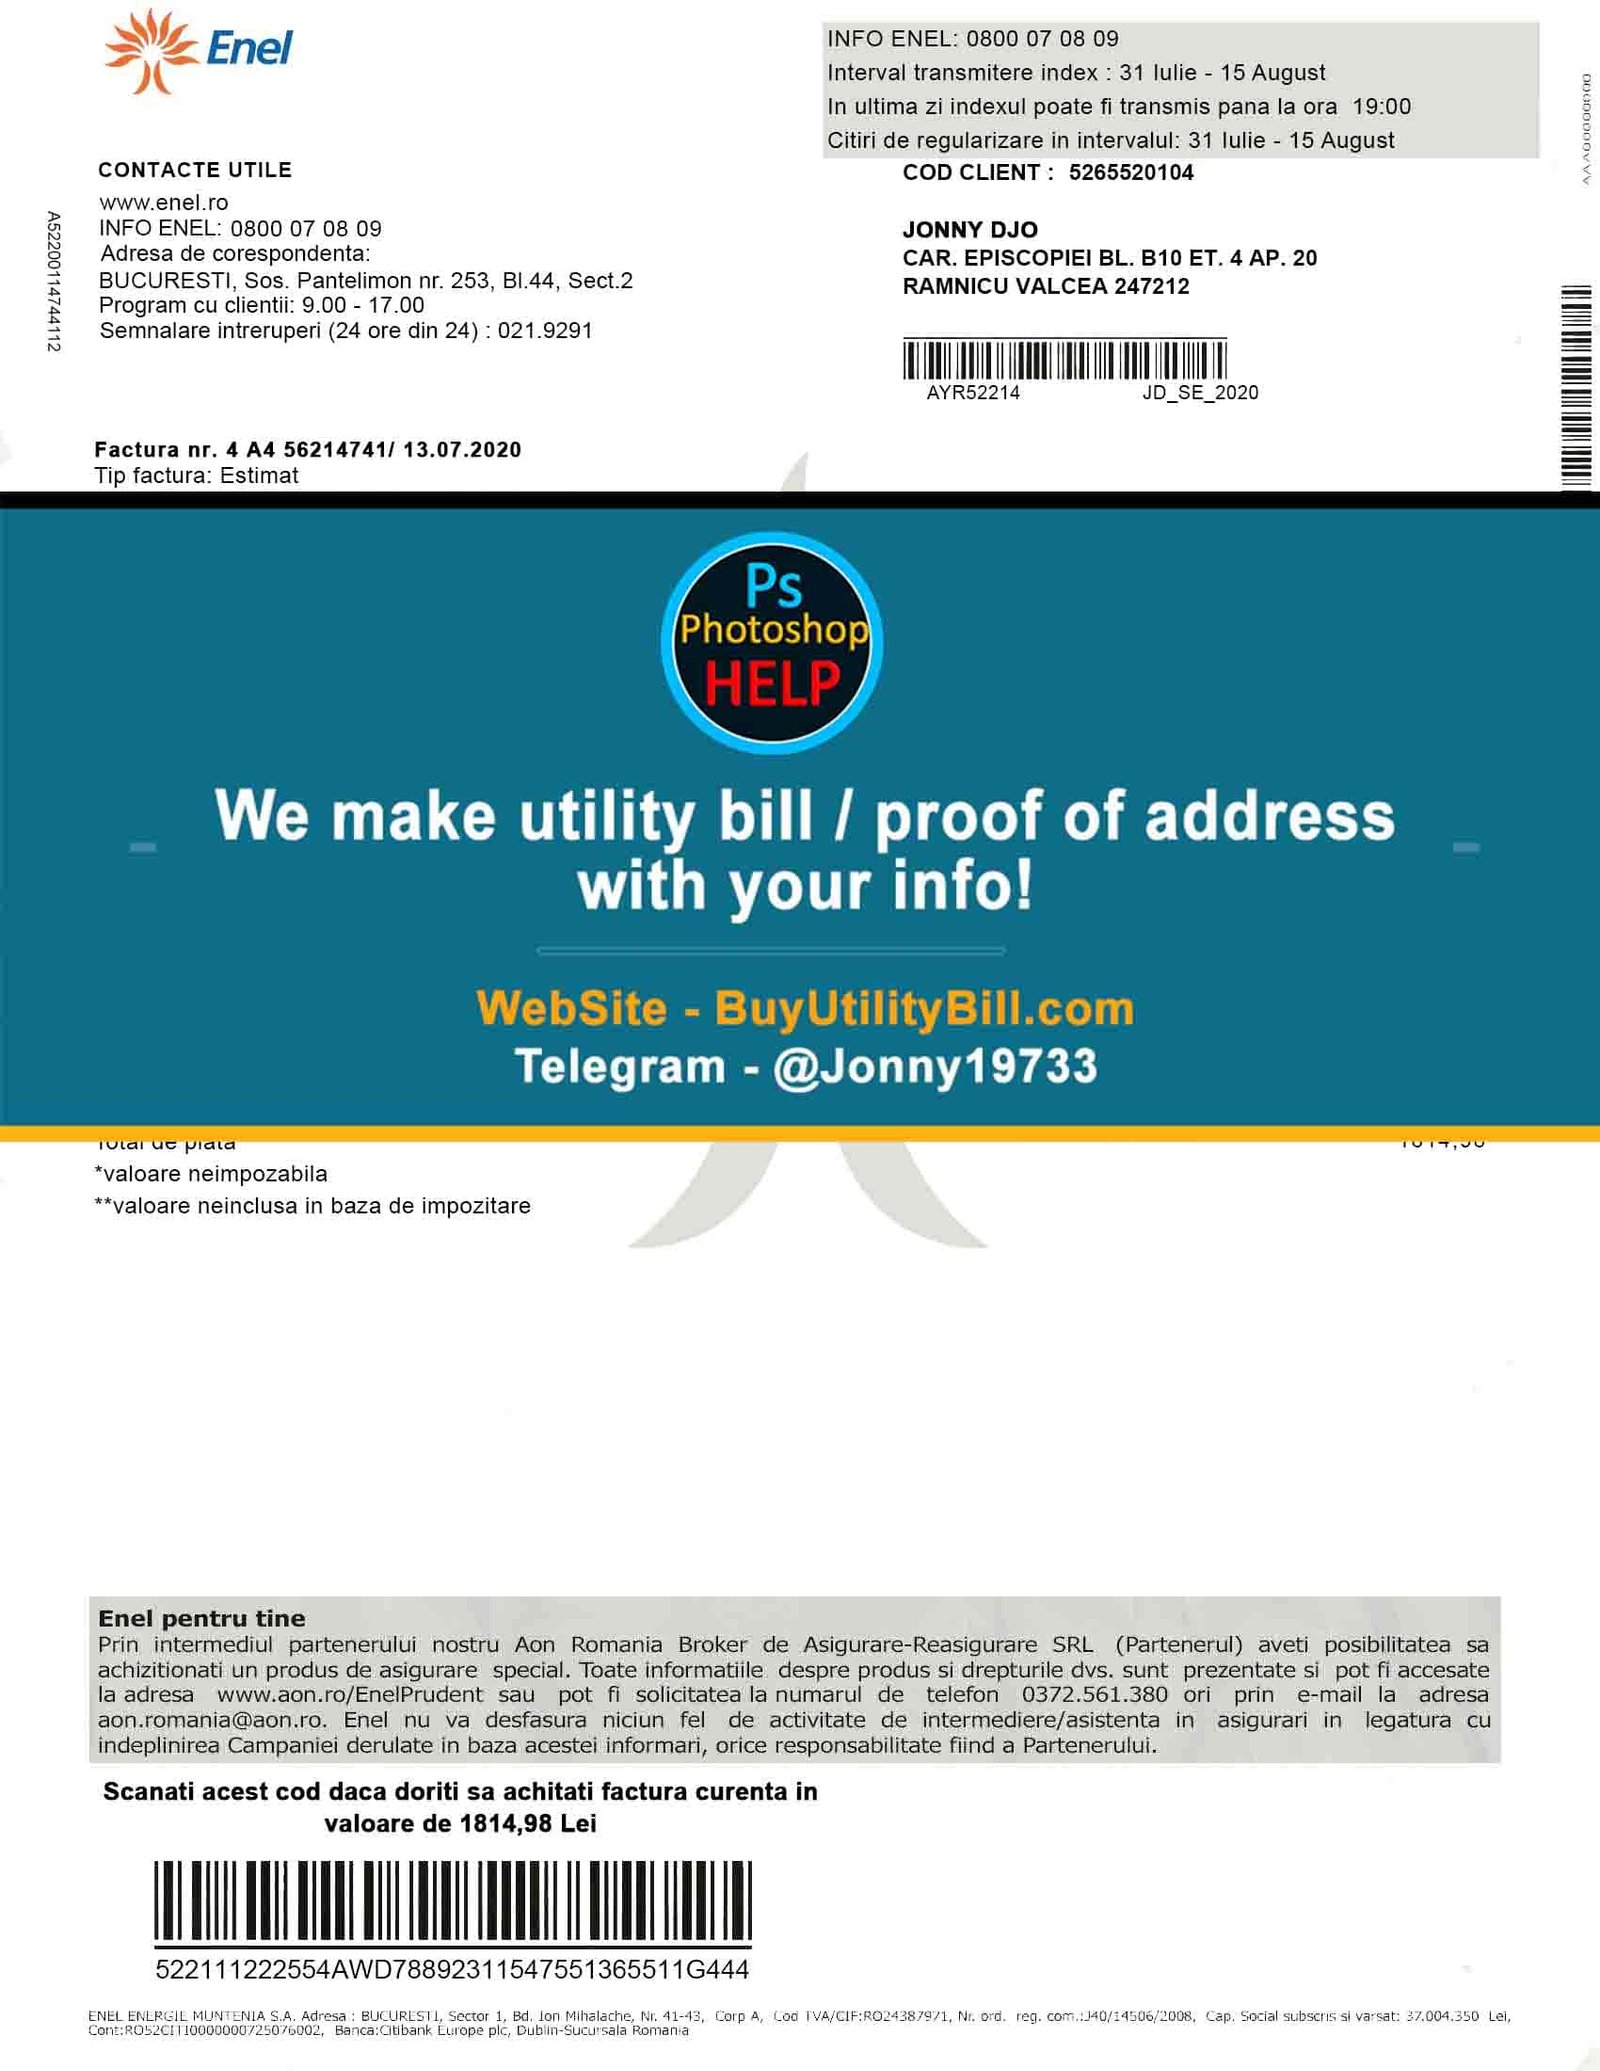 Romania Energy Fake Utility Bill Enel Fake Utility bill